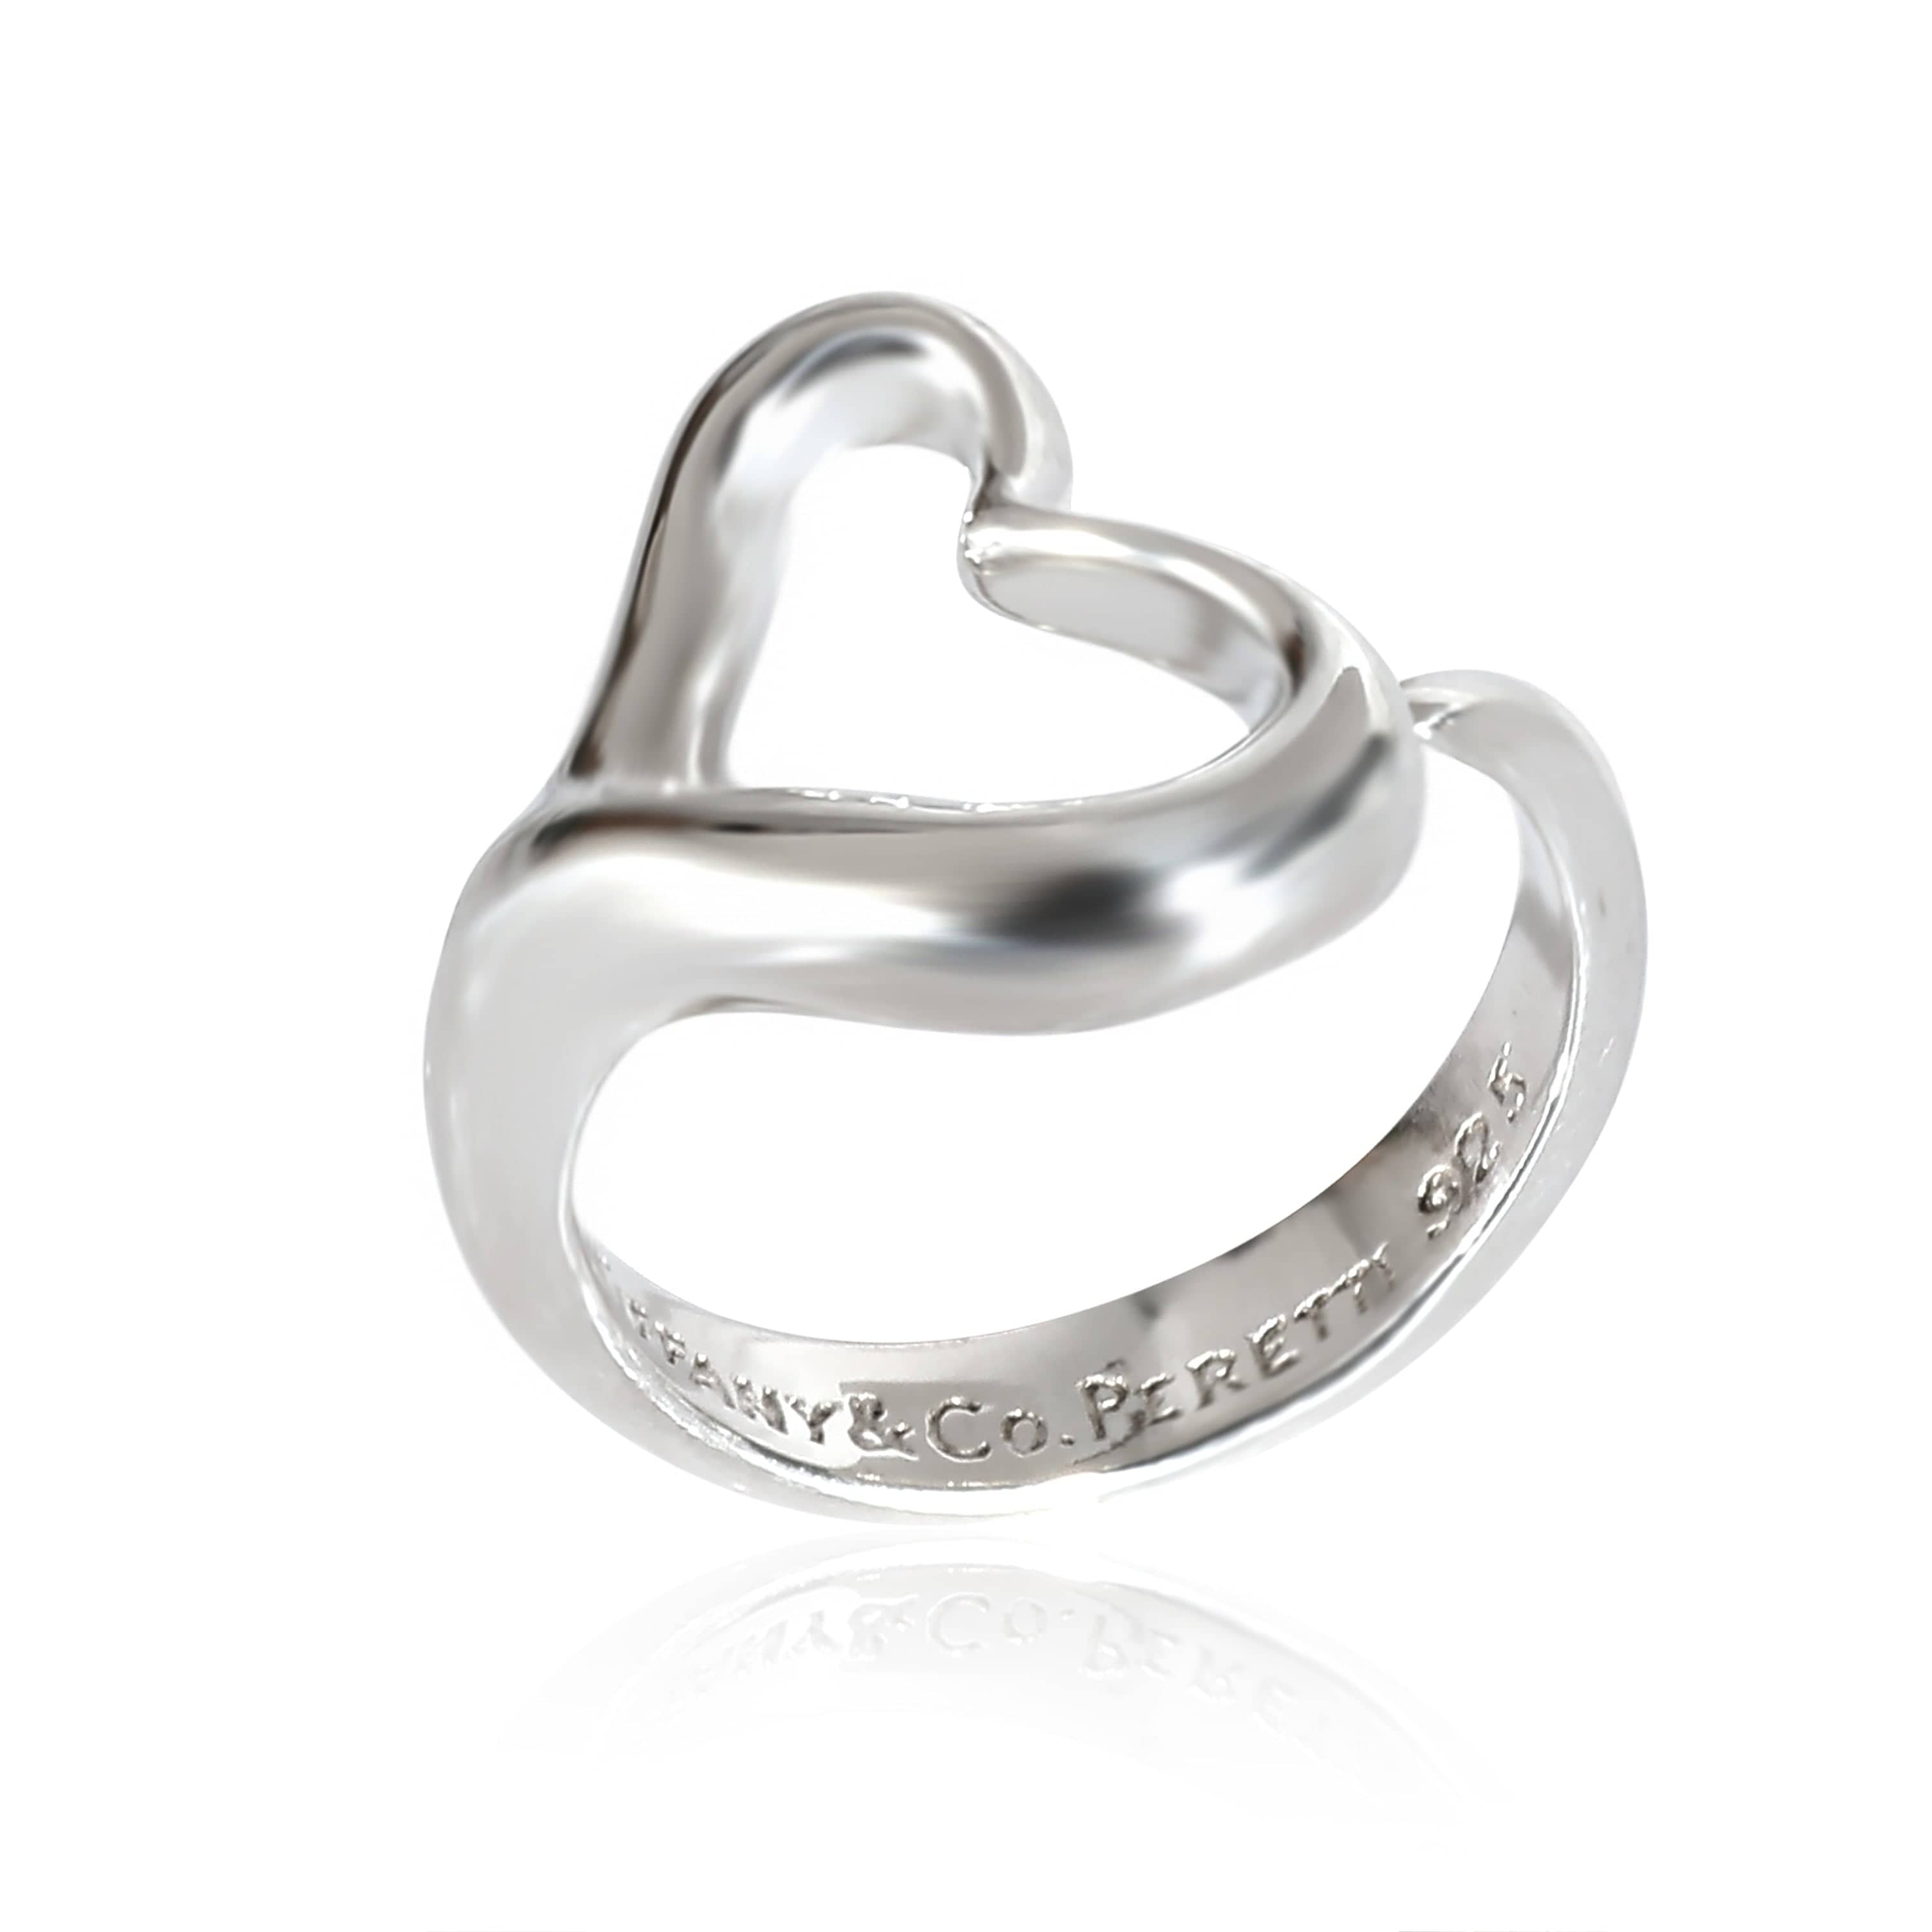 Tiffany & Co. Tiffany & Co. Elsa Peretti Open Heart Ring in Sterling Silver